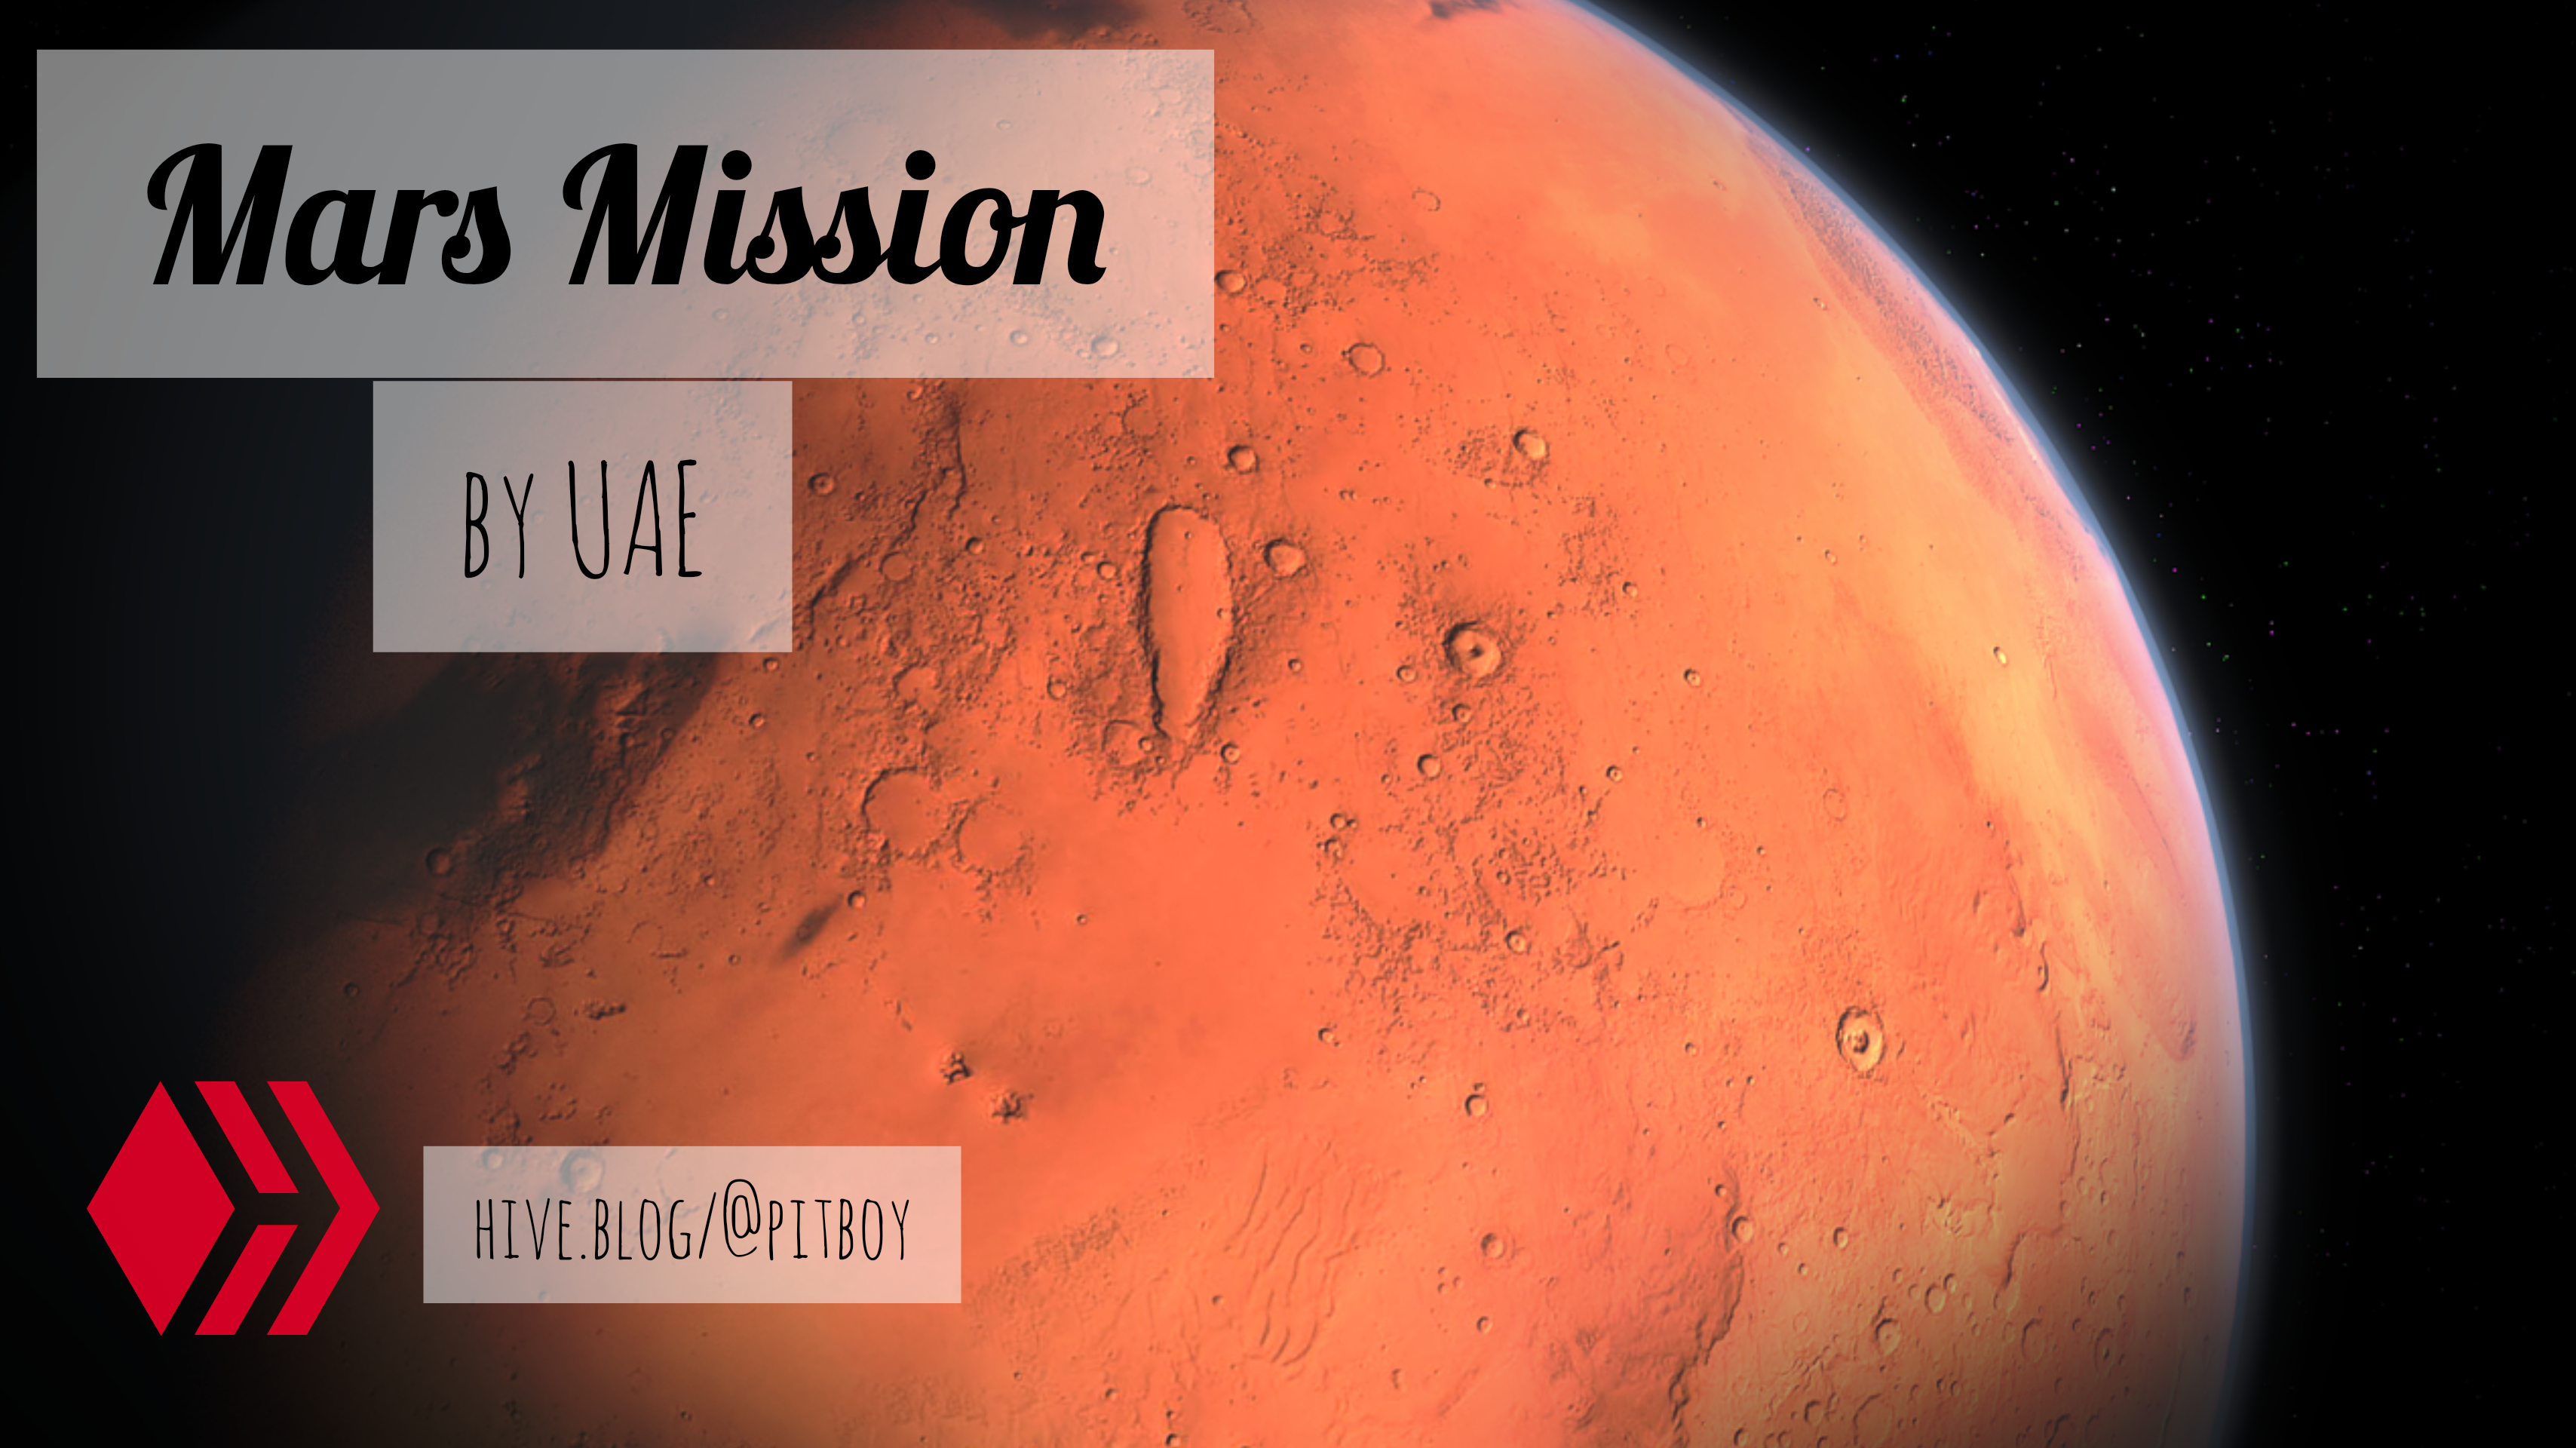 Mission Mars by UAE